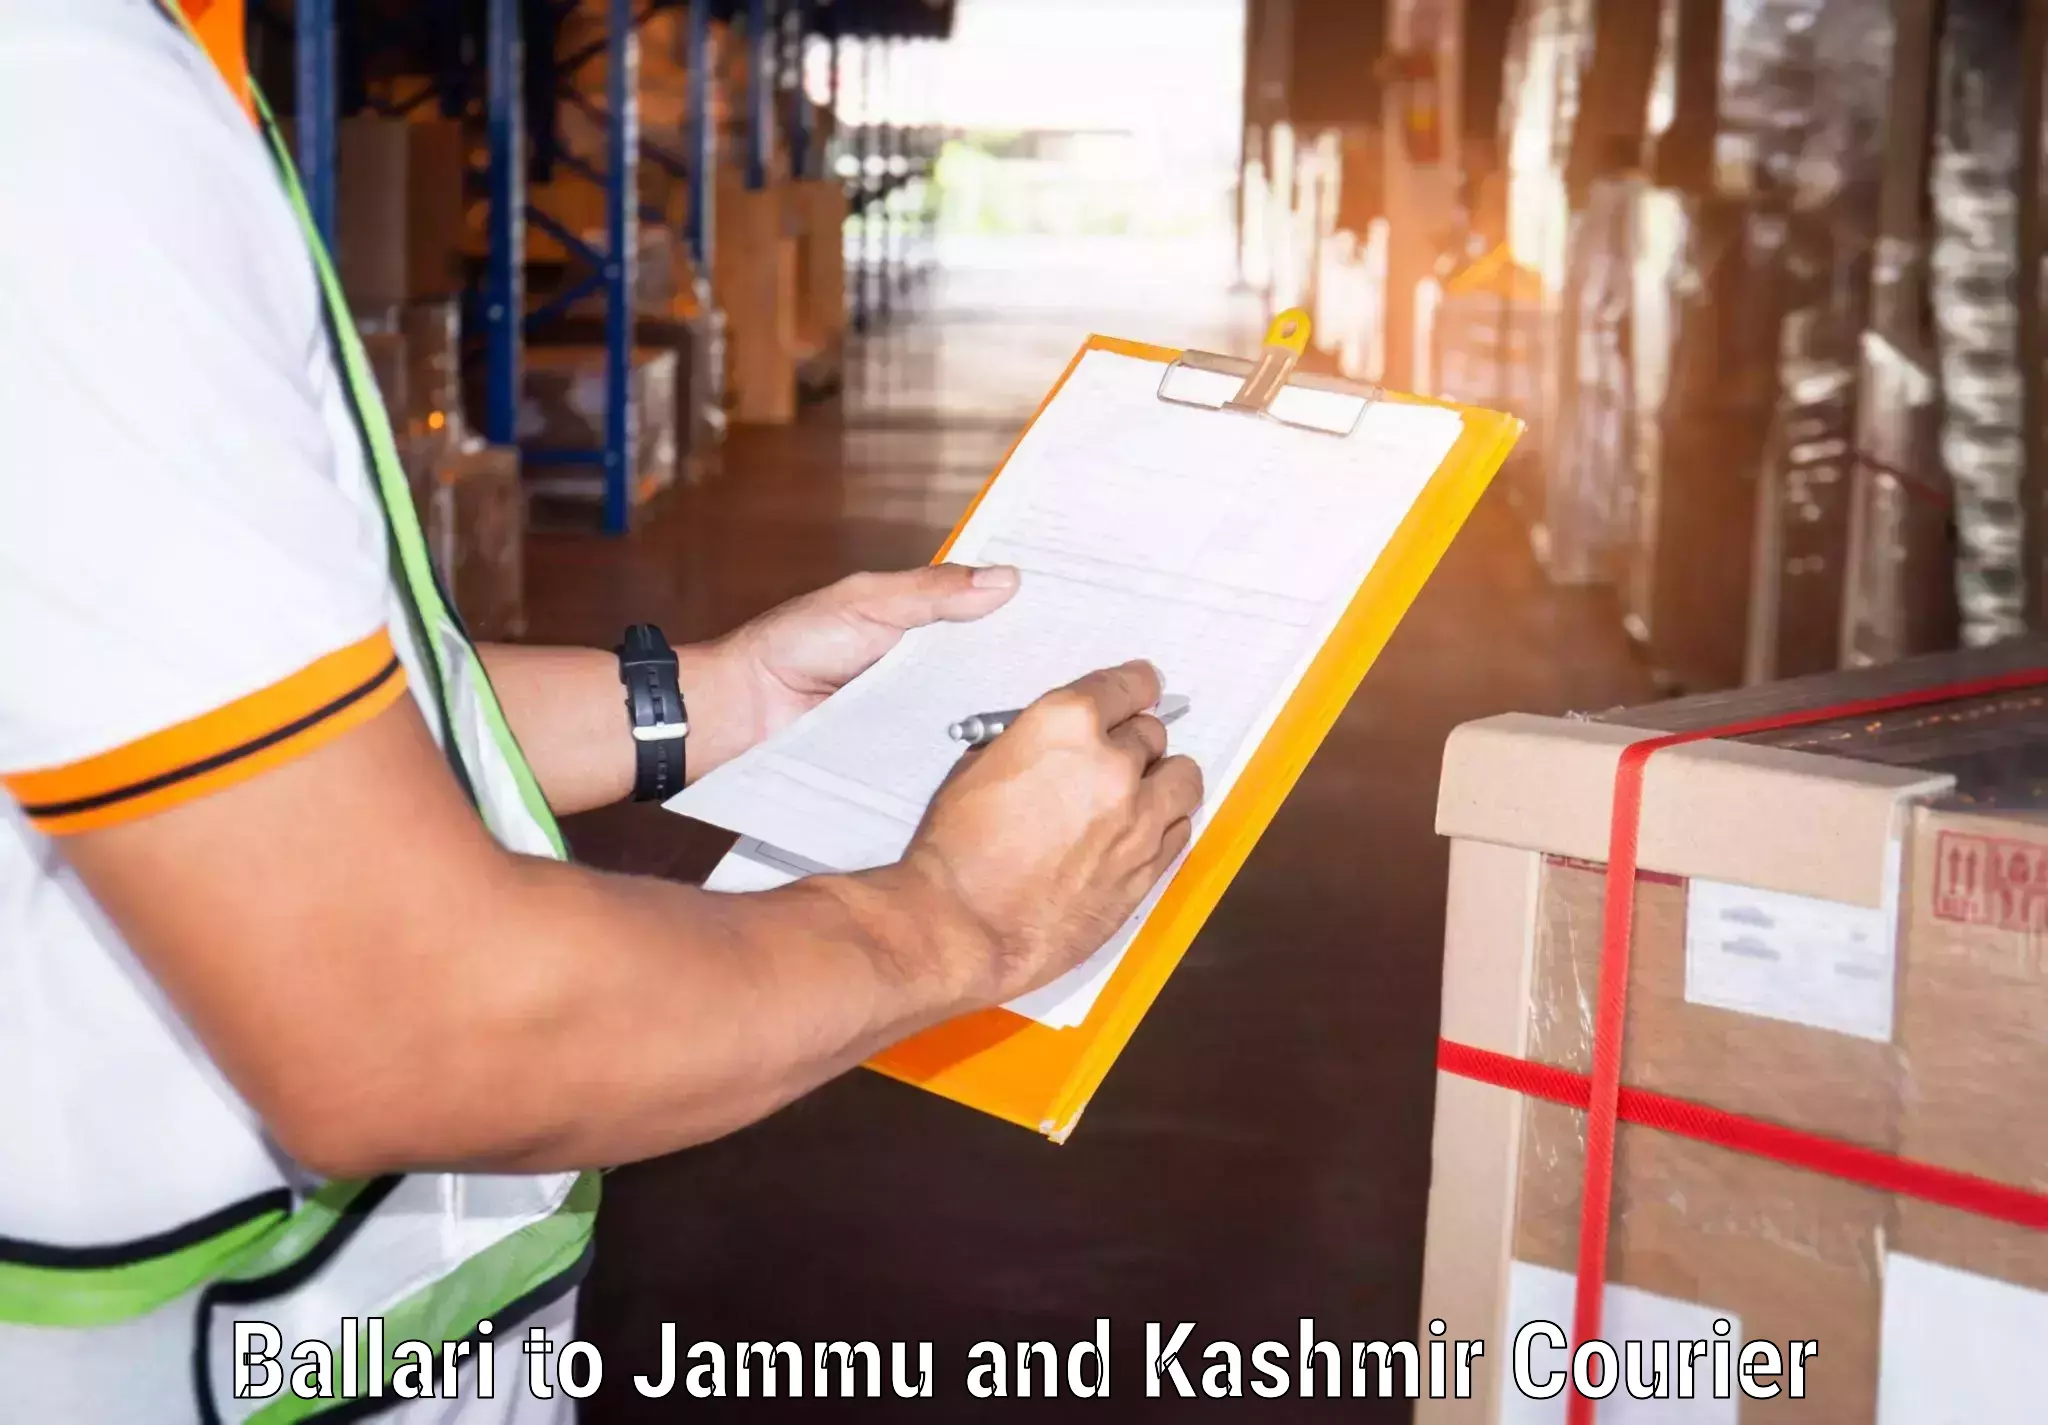 Express logistics providers Ballari to Jammu and Kashmir